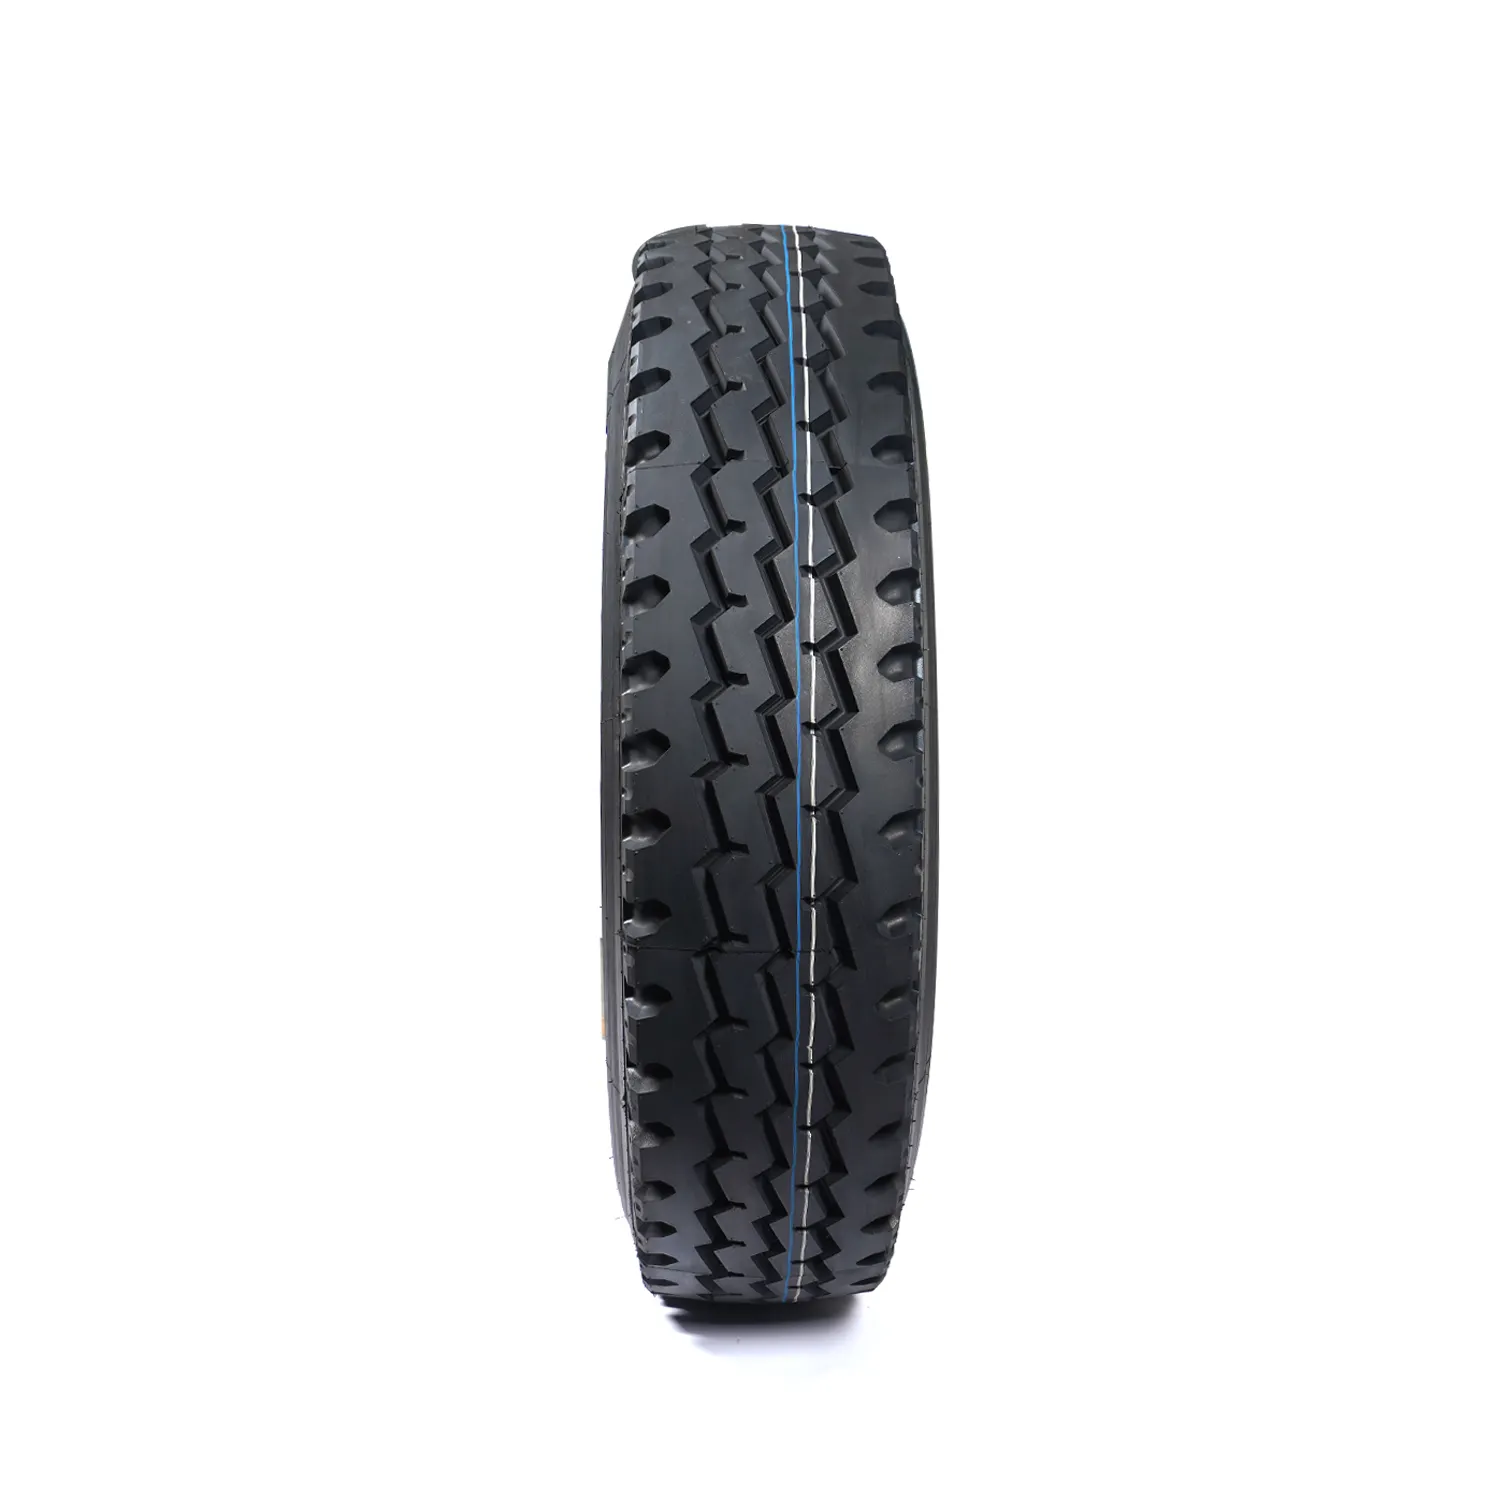 Truck tires manufacturer Tires 700 16 11R 22.5 truck tires